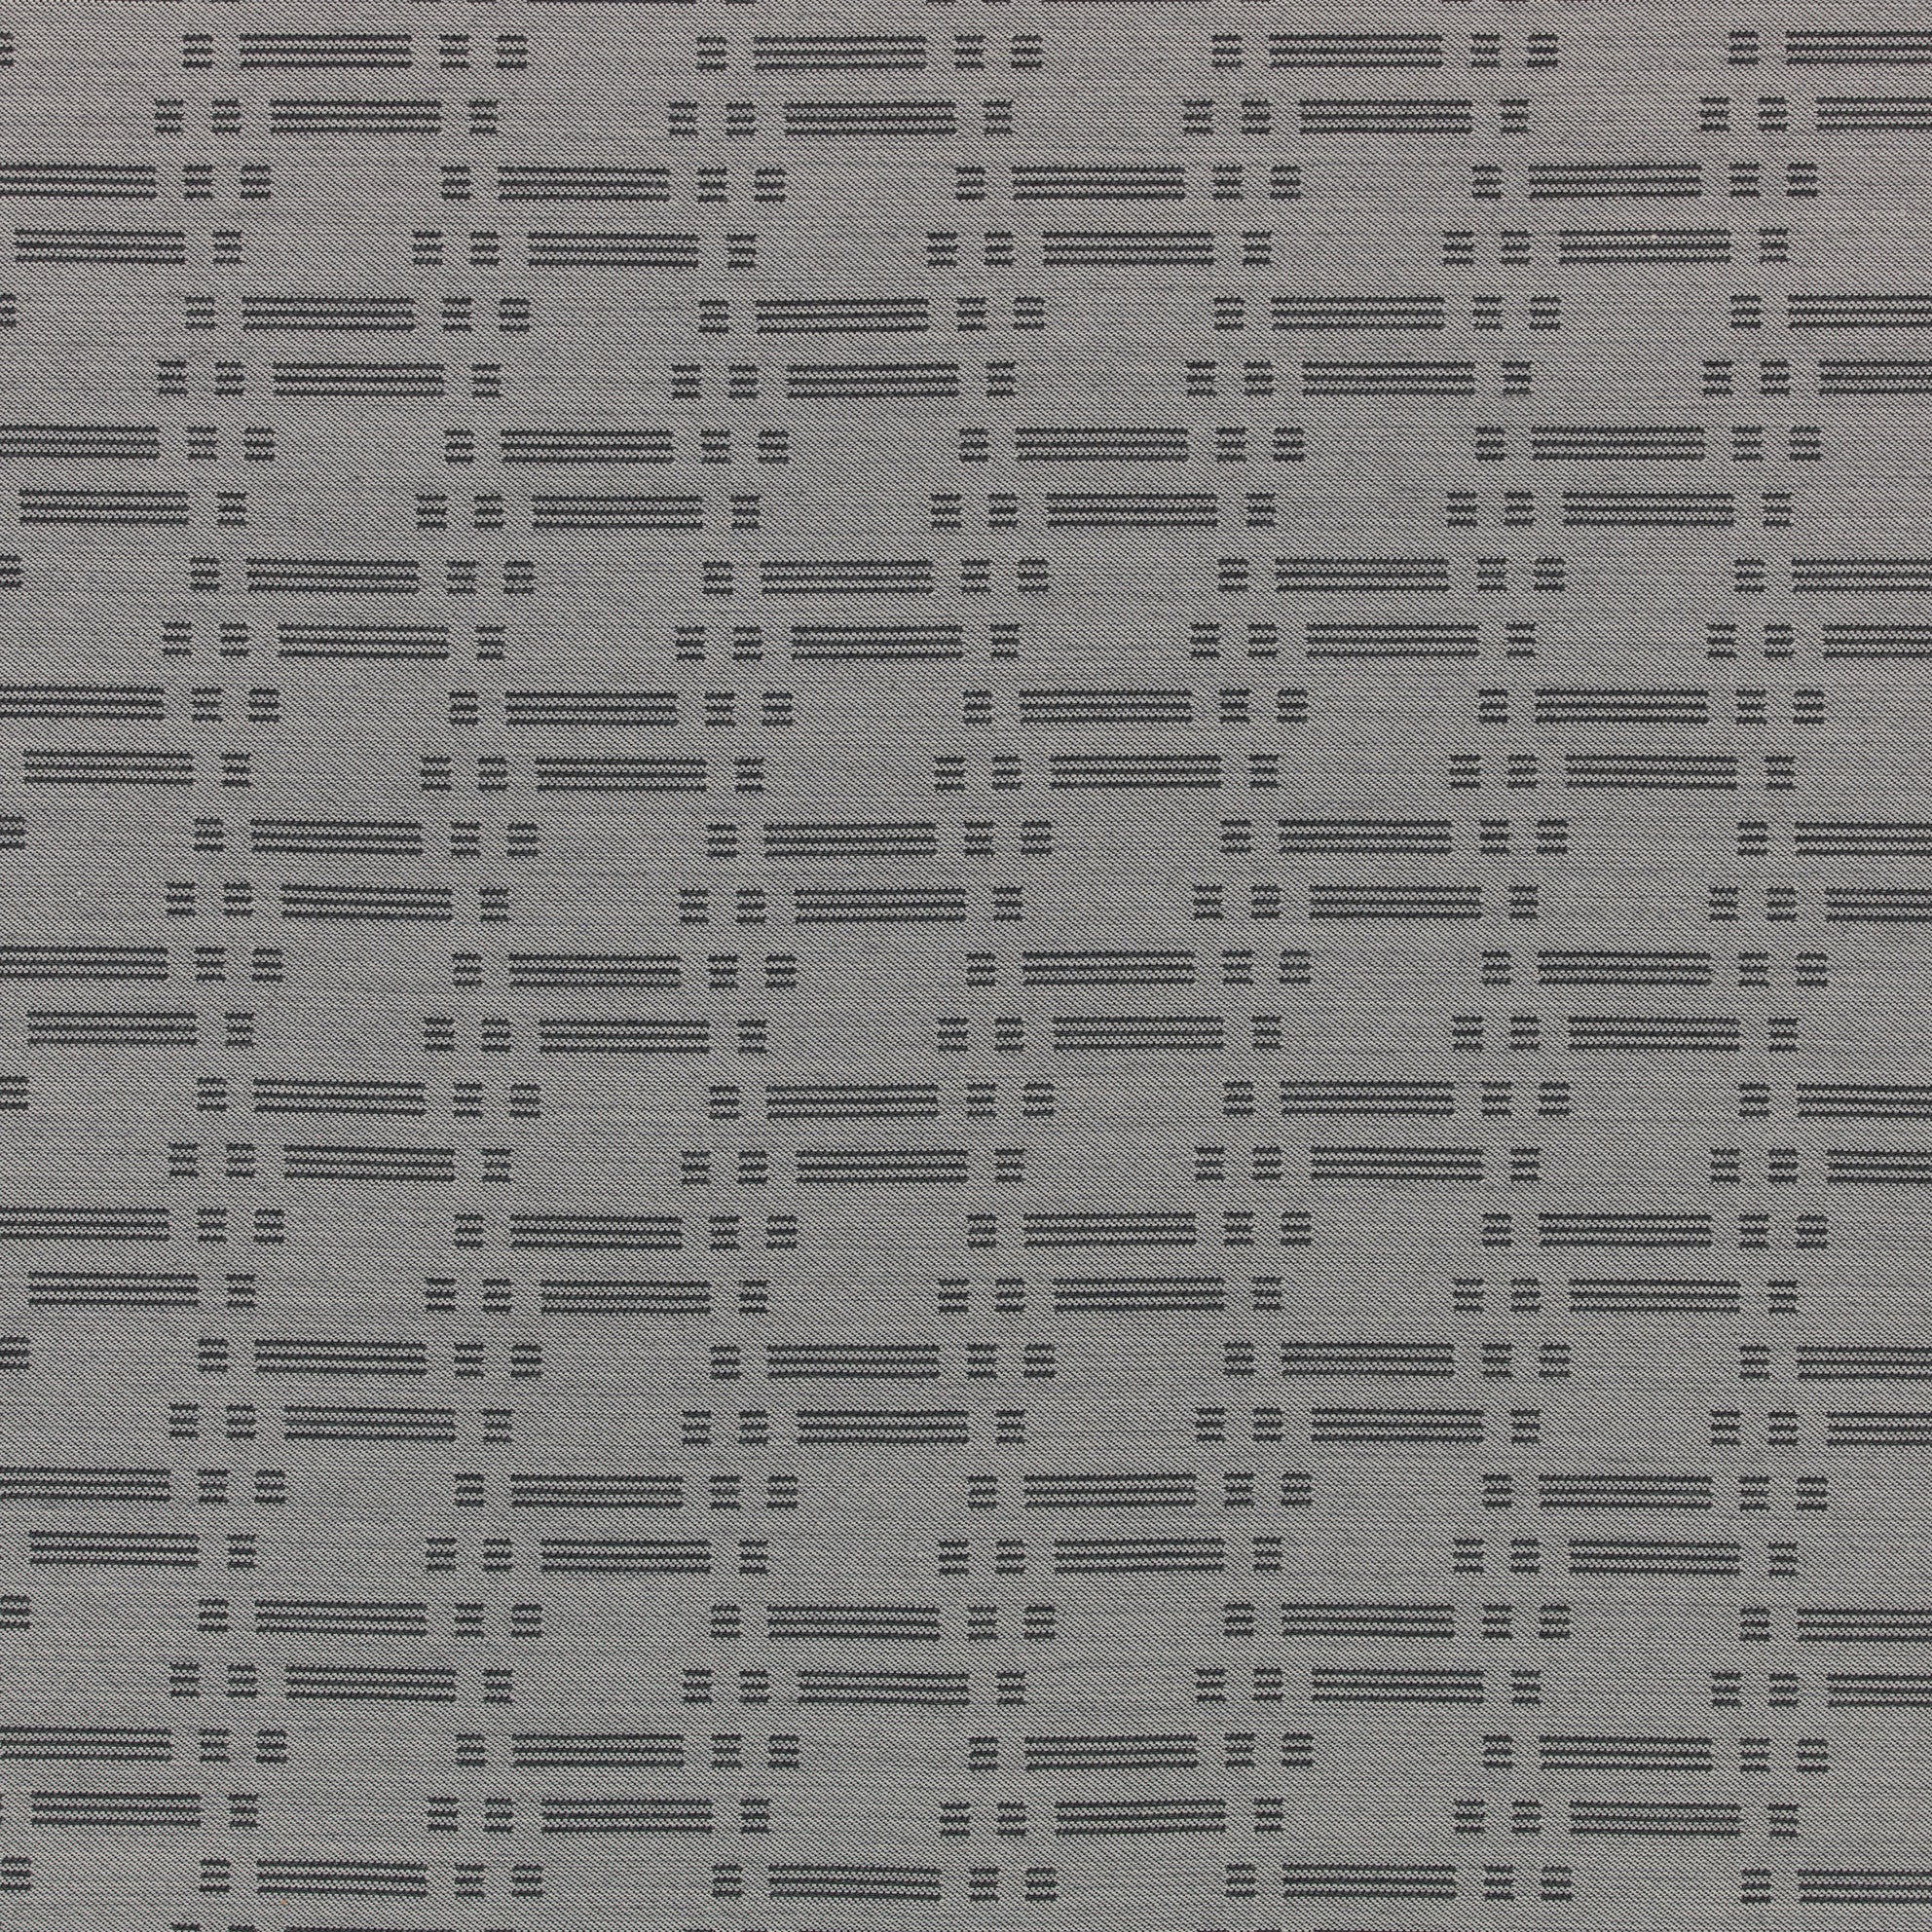 Triton Contract Furnishing Fabric - Grey Reverse | Nicholas Engert Interiors